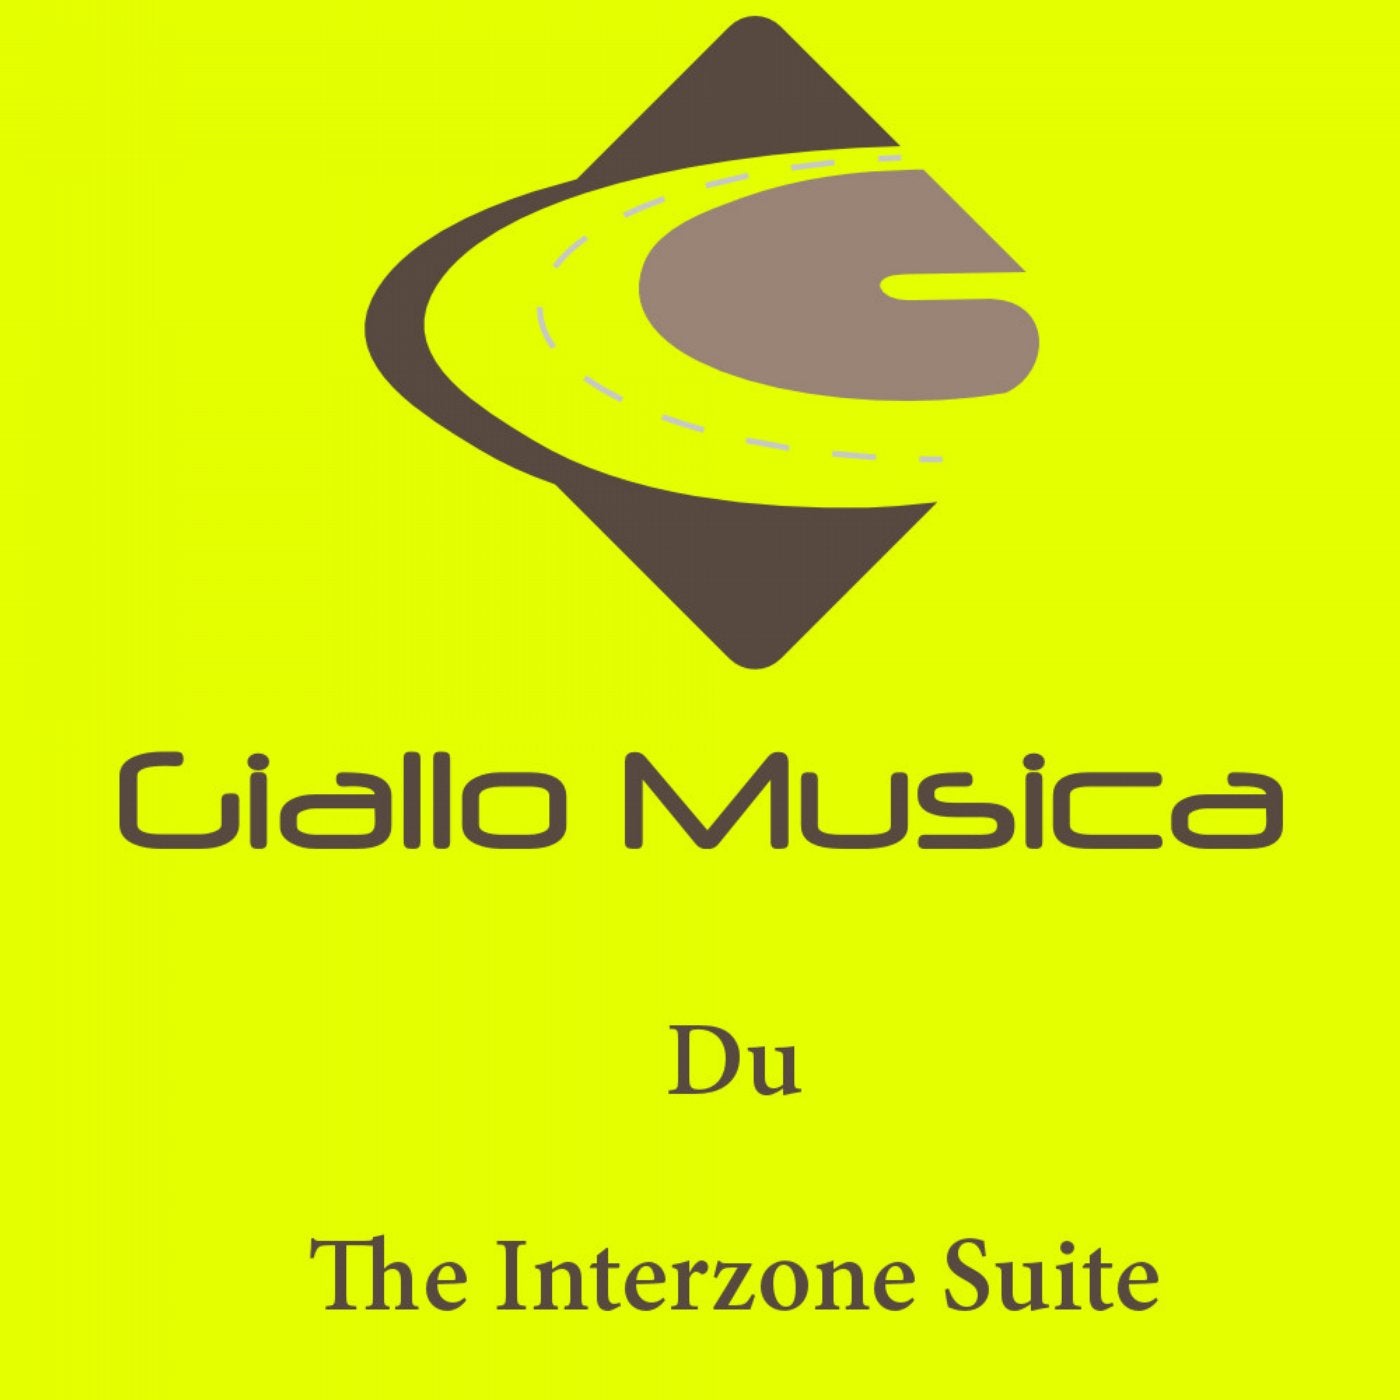 The Interzone Suite